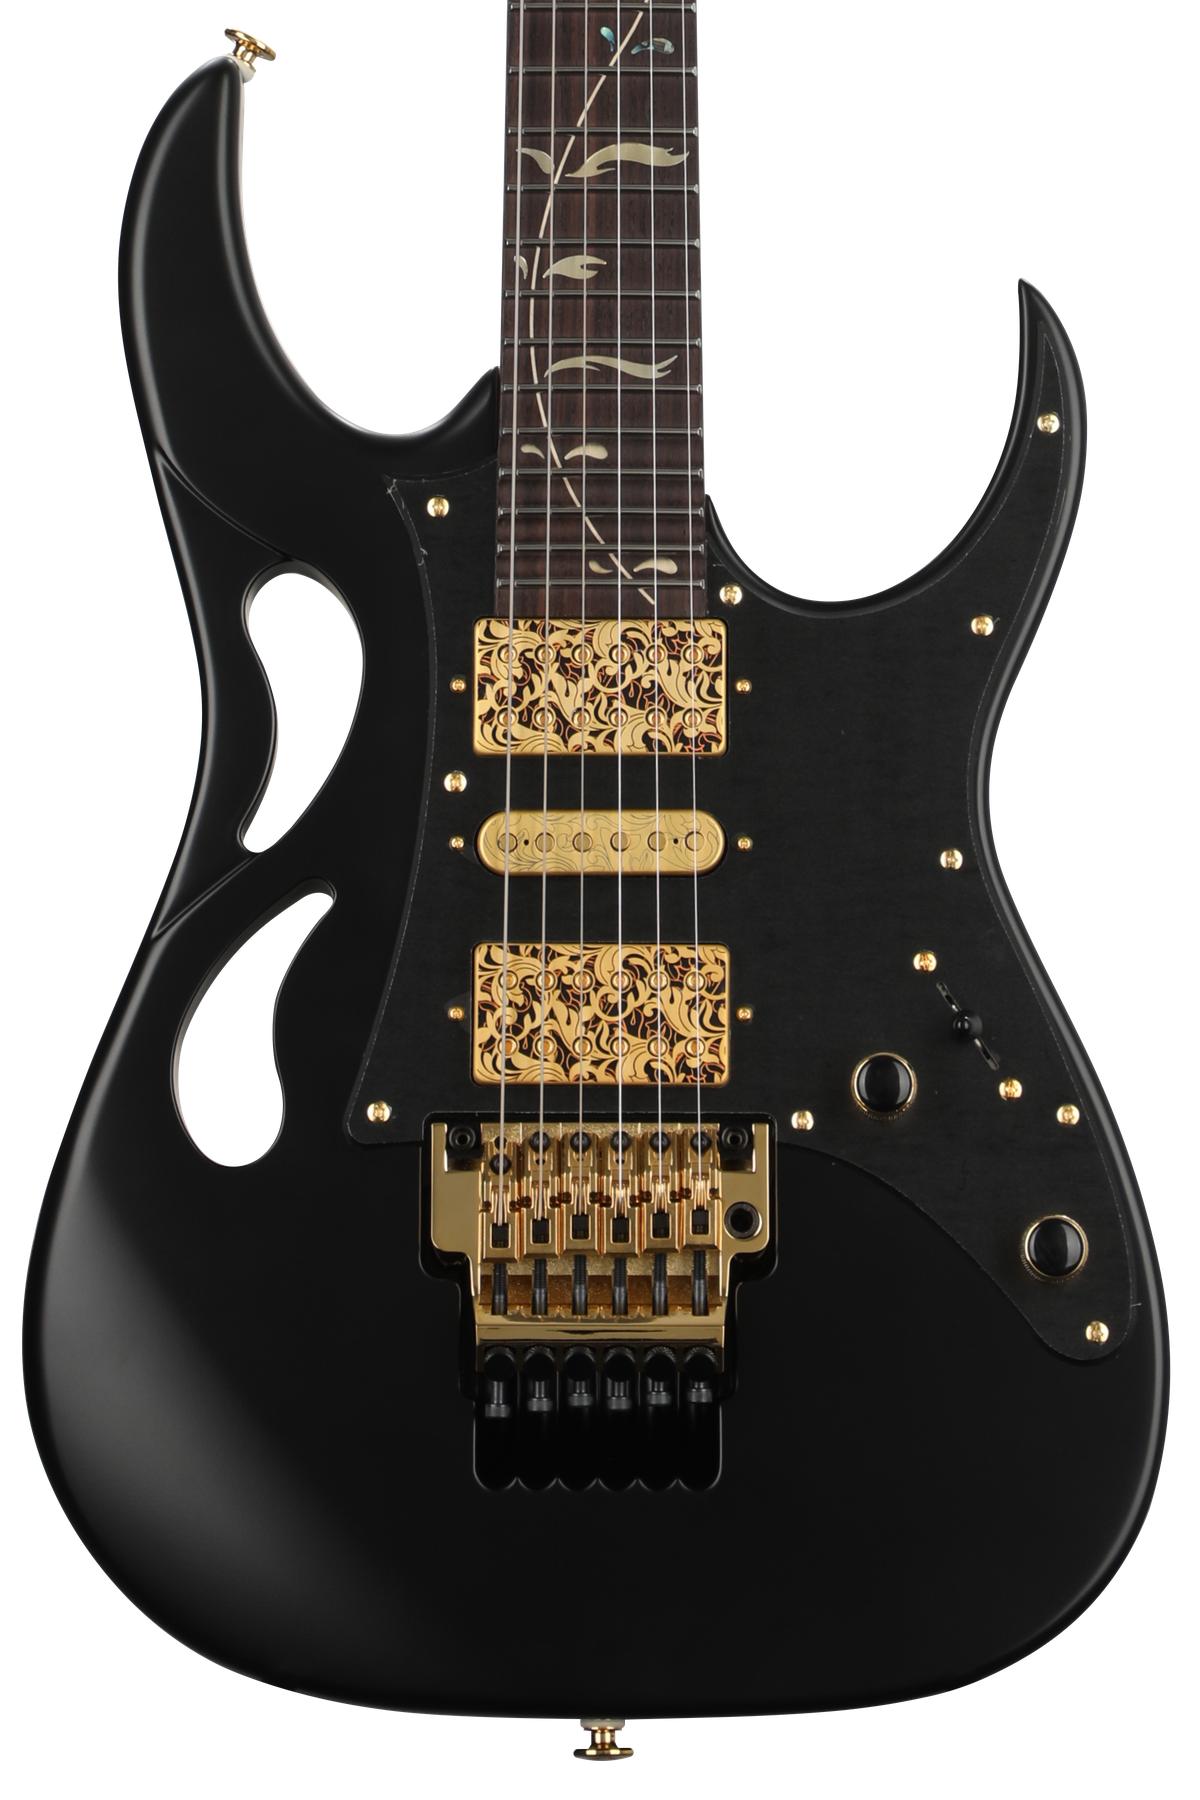 Ibanez Steve Vai Signature PIA3761 Electric Guitar - Onyx Black